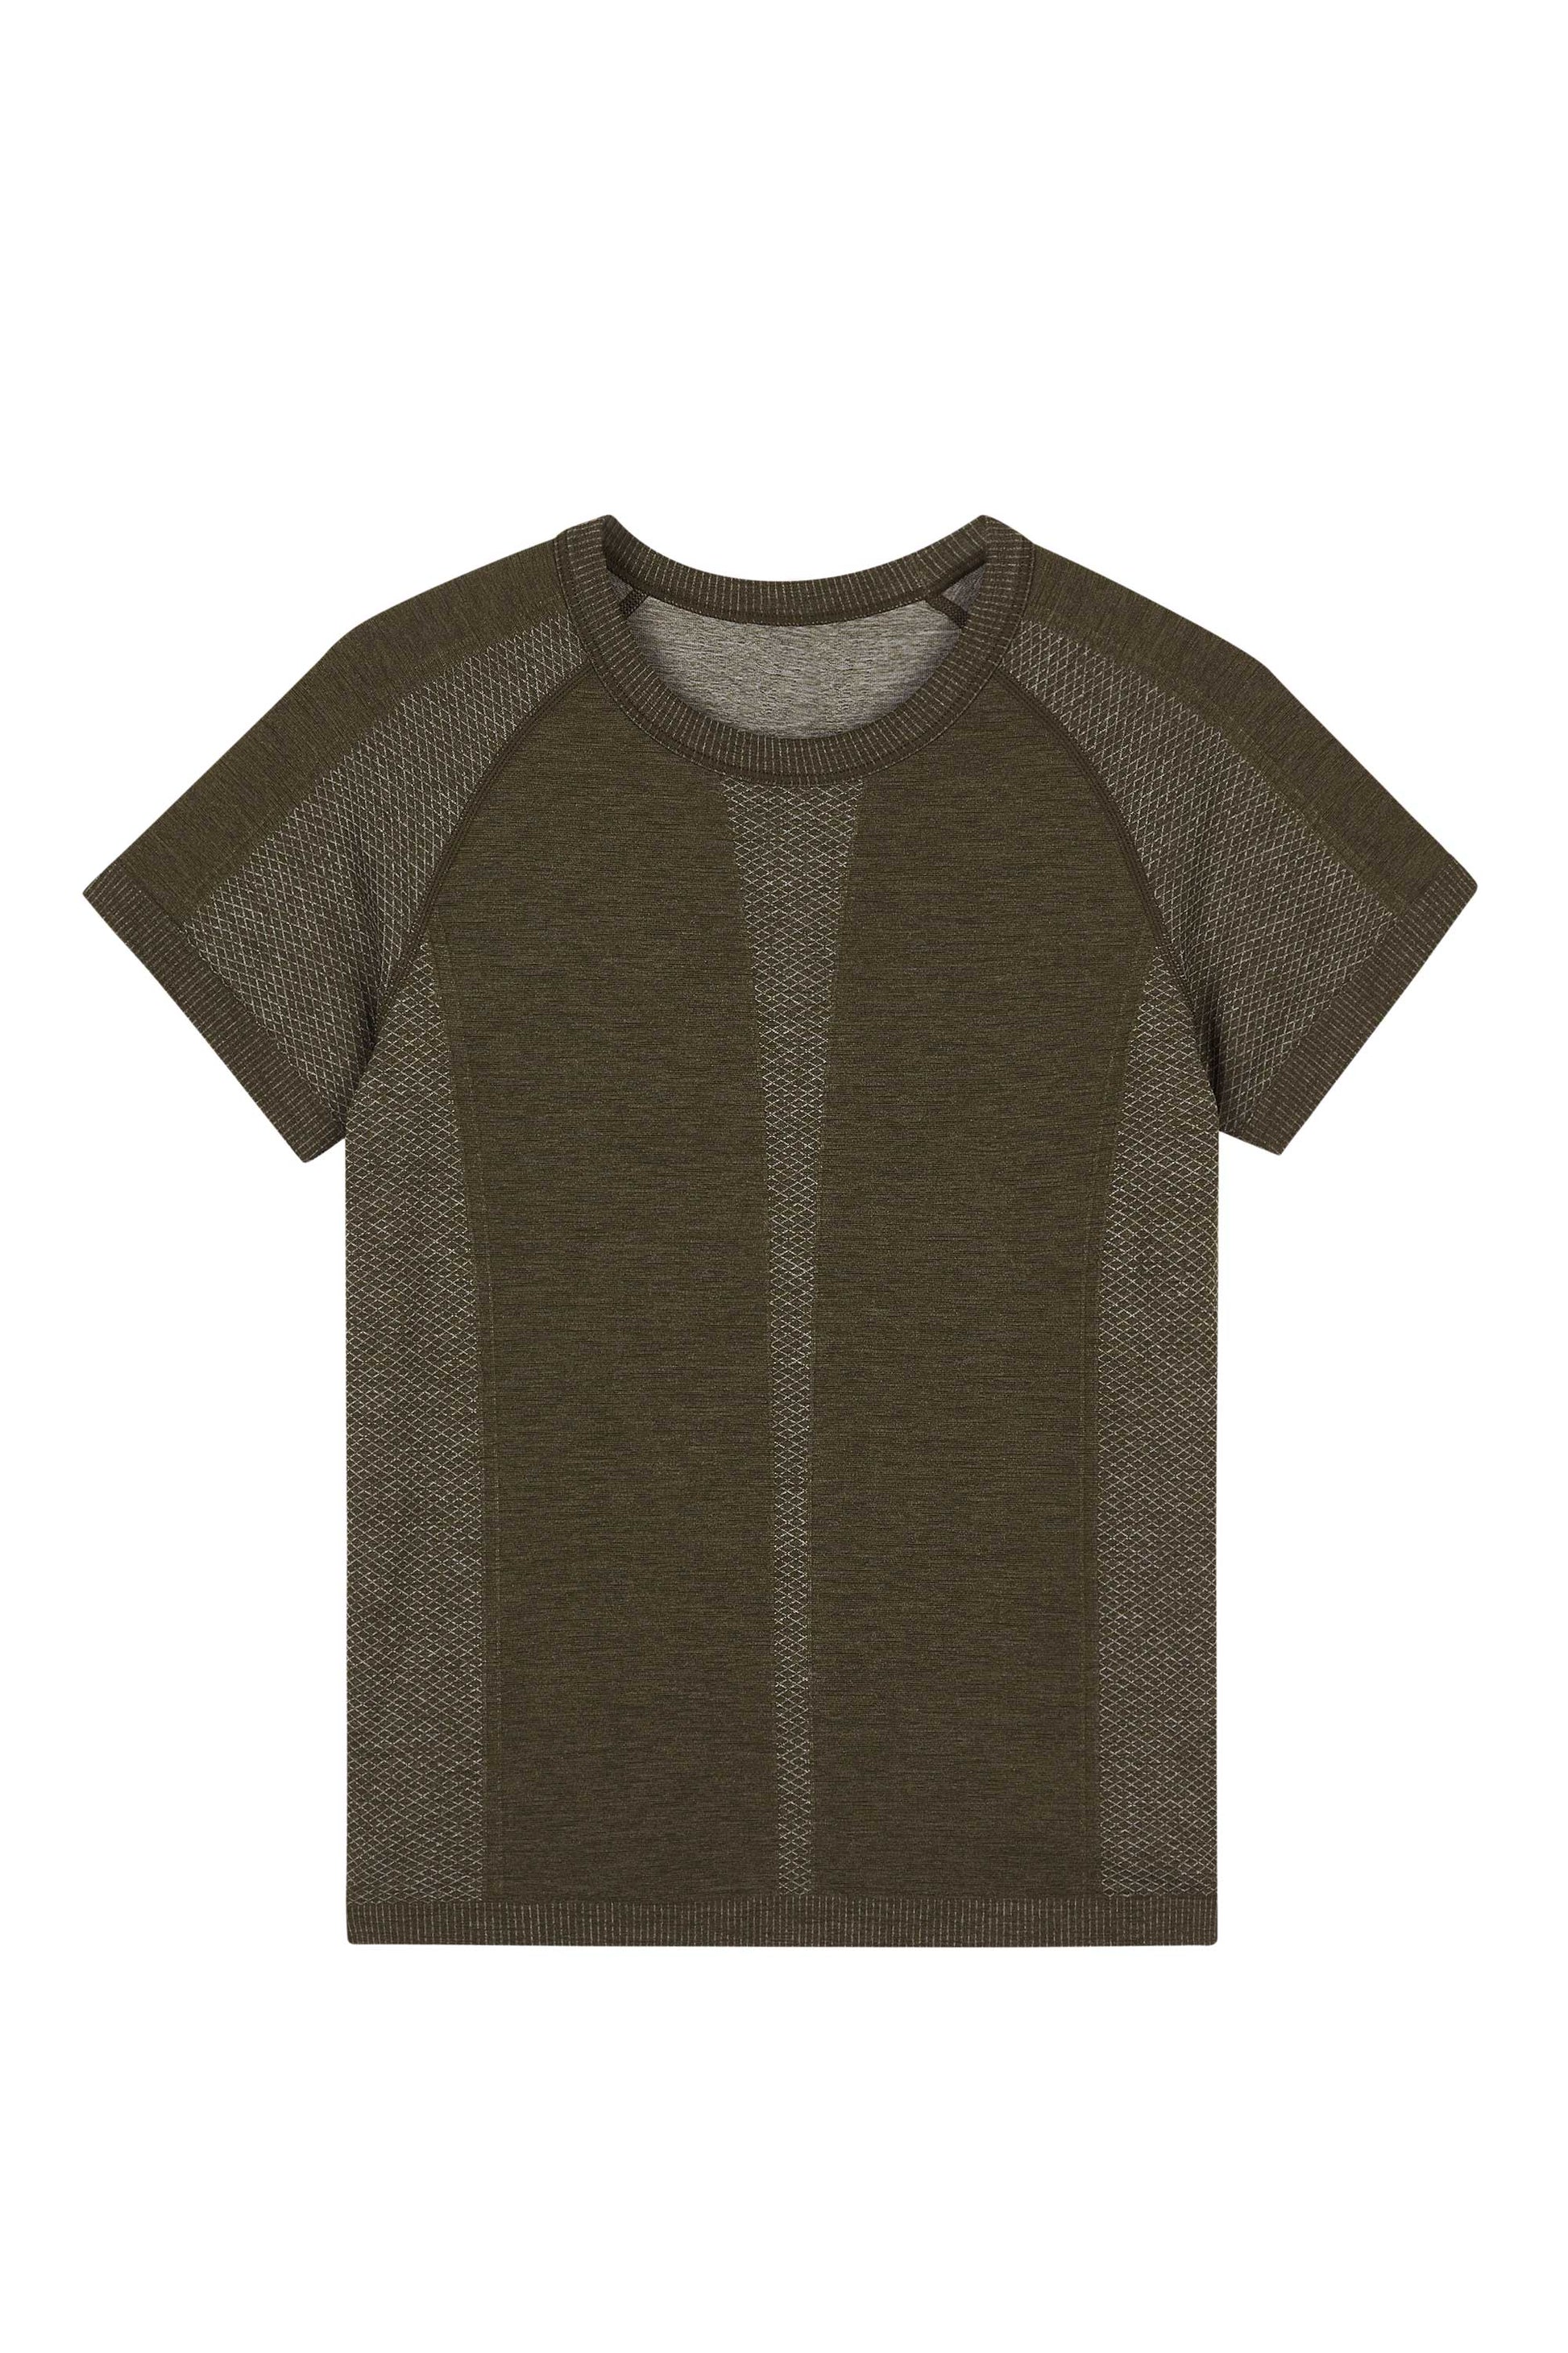 Black Core Seamless T-Shirt